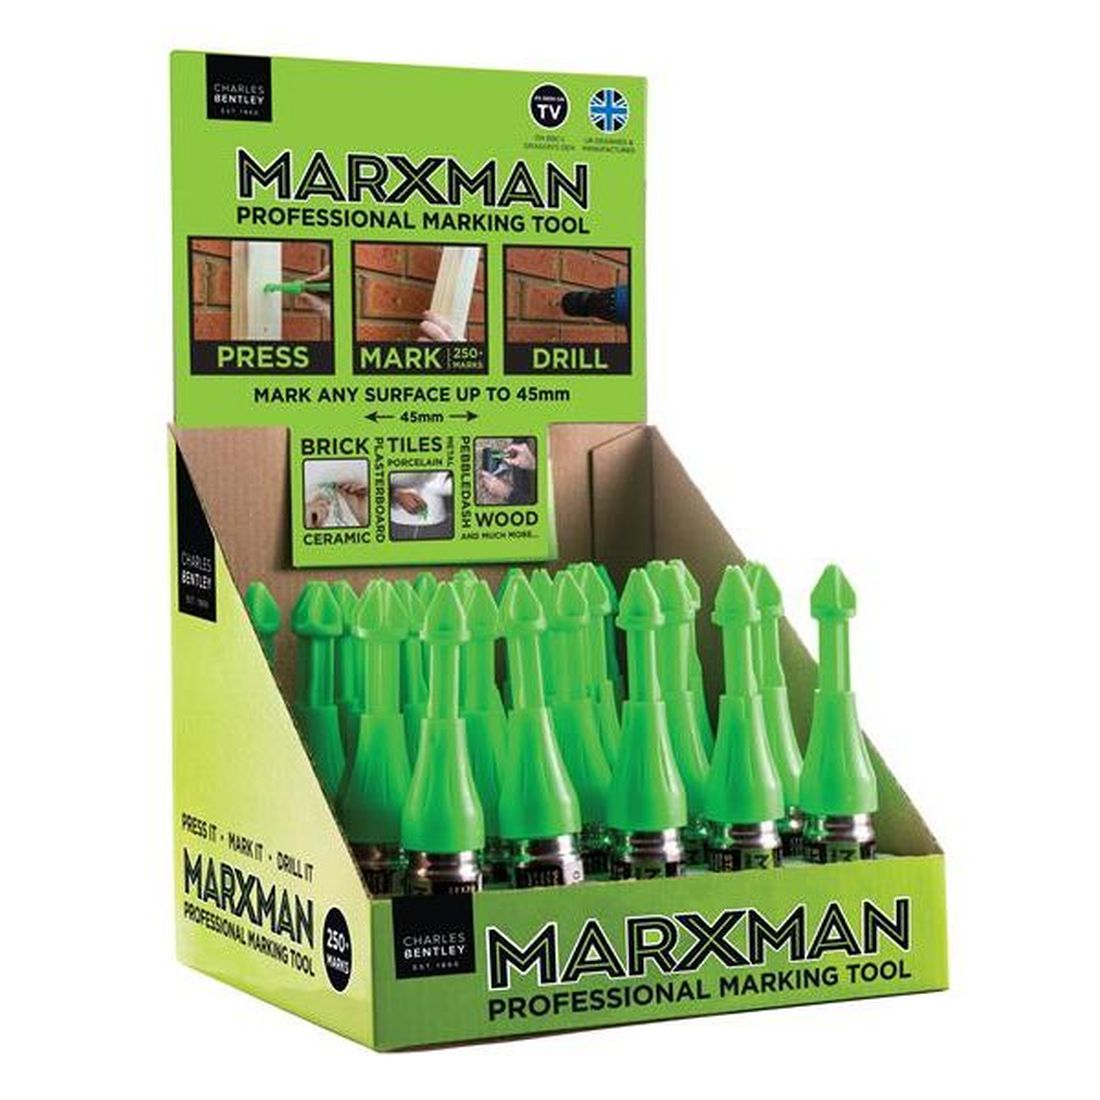 Marxman MarXman Standard Professional Marking Tool (CDU of 30)                          